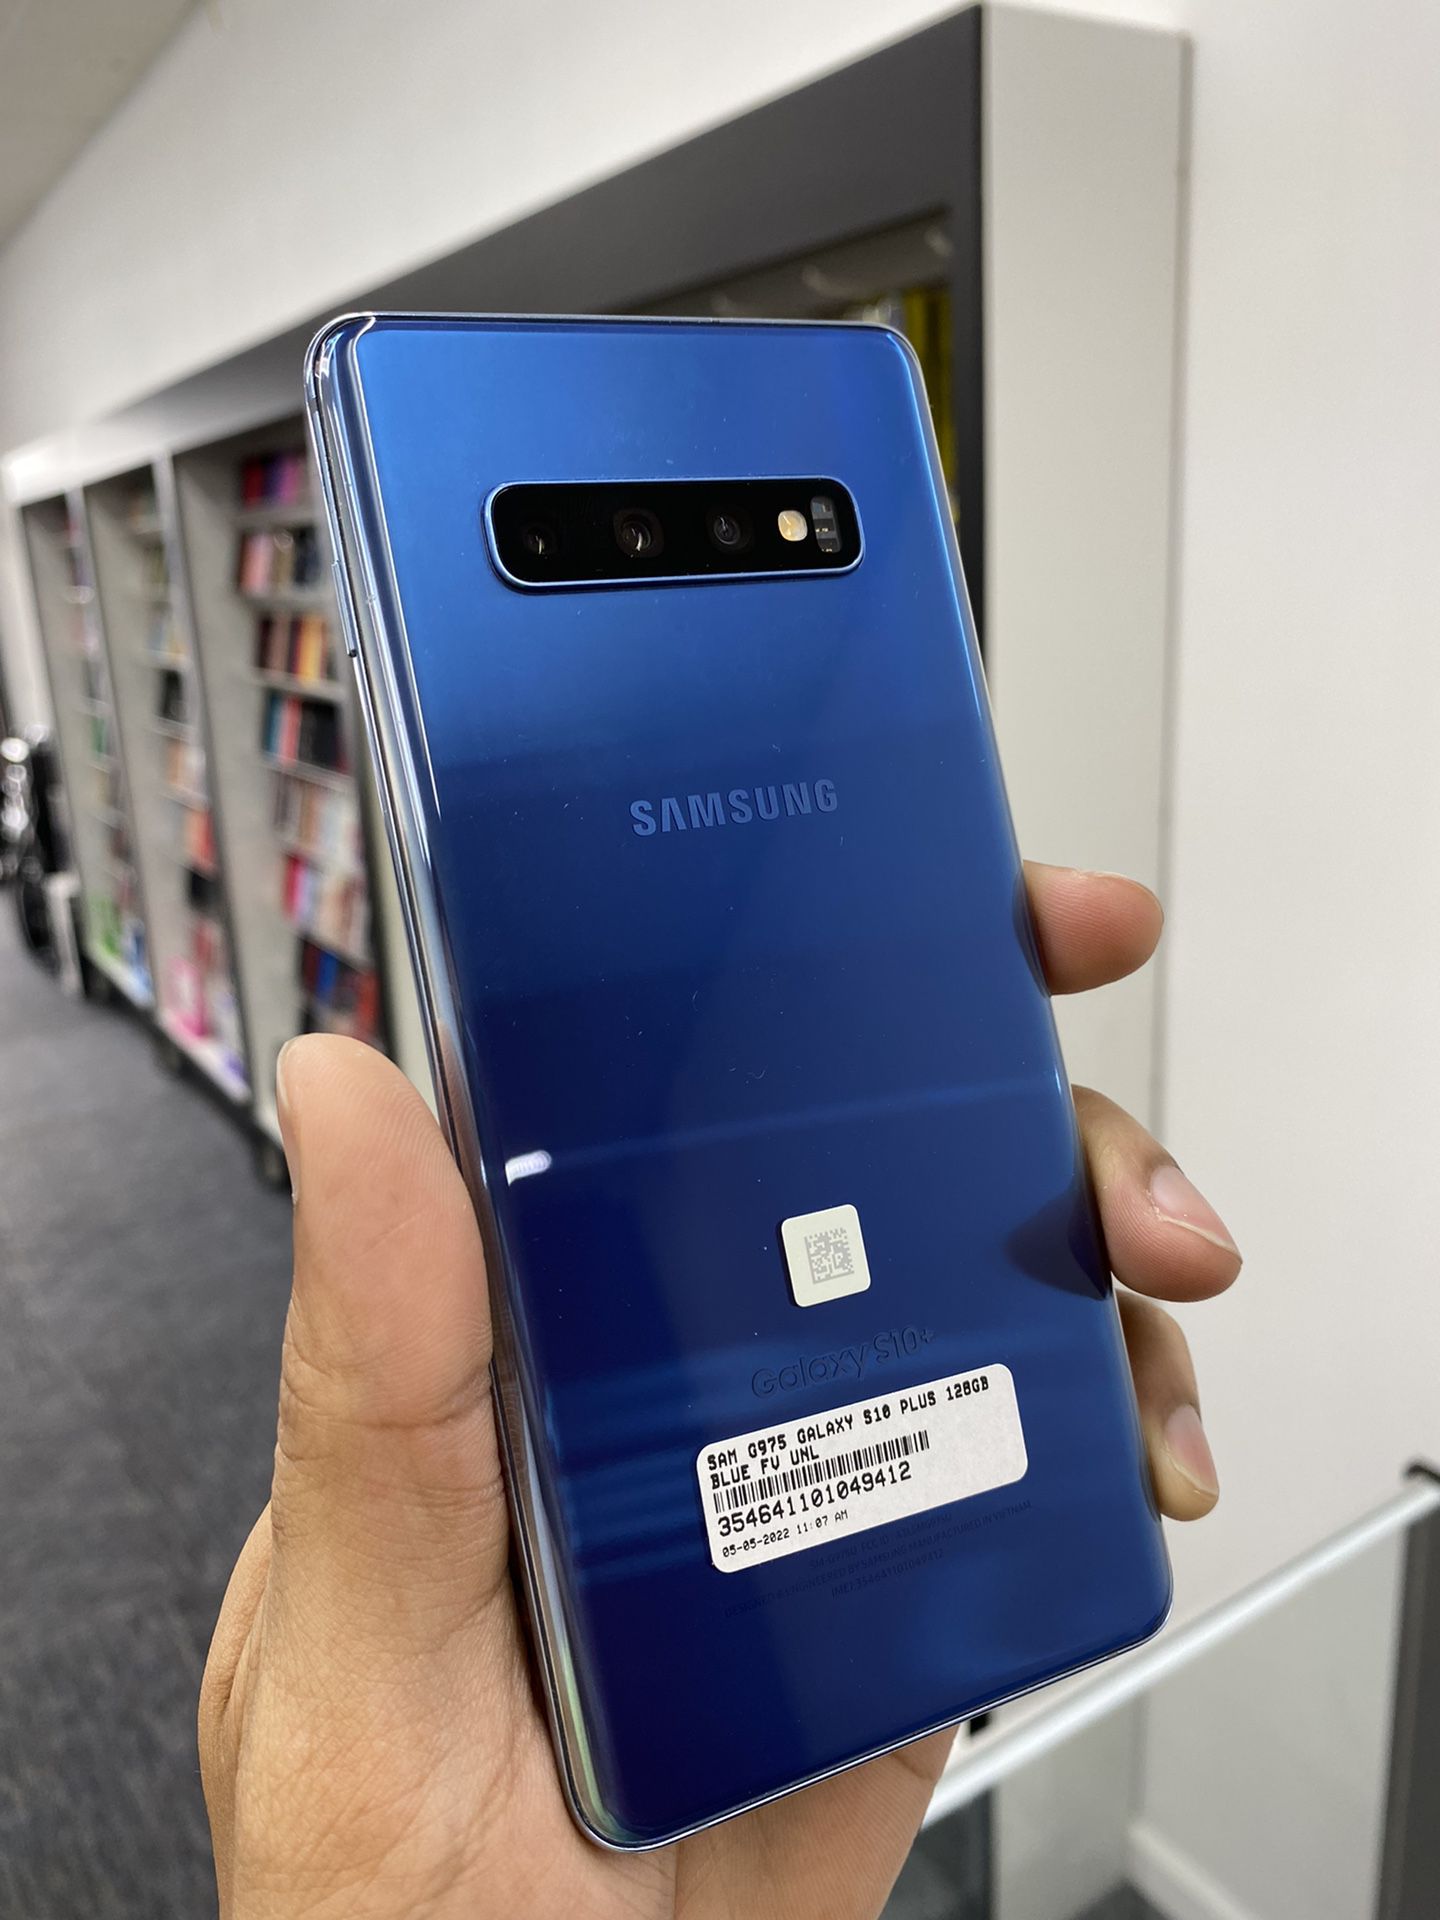 Samsung Galaxy S10 Plus 128gb Unlocked for Sale in Houston